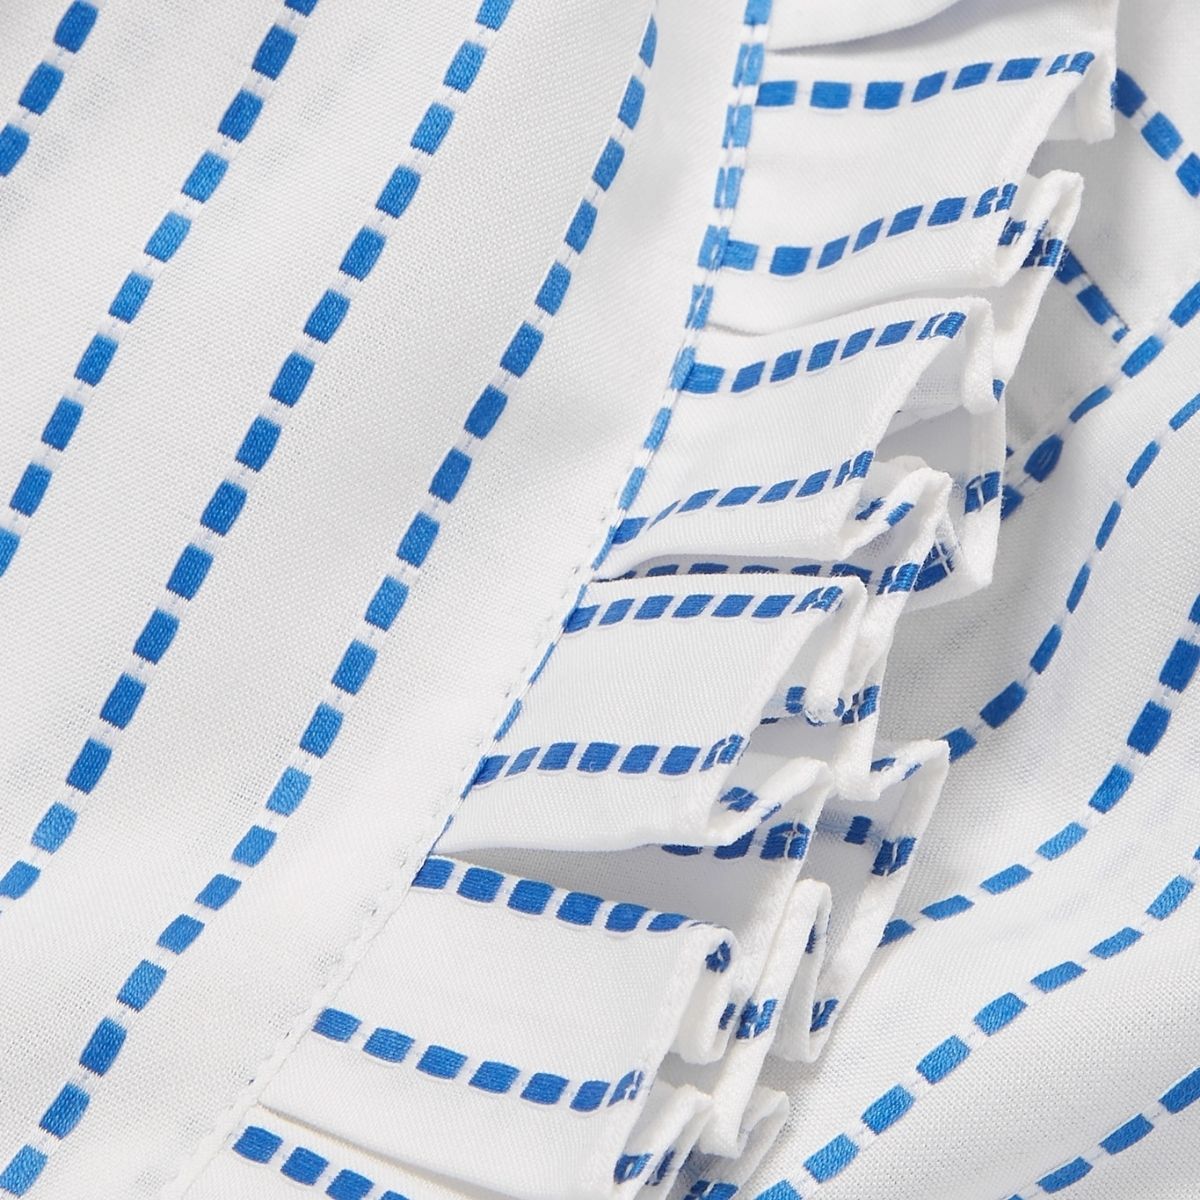 Ruffled Striped Cotton Maxi Dress